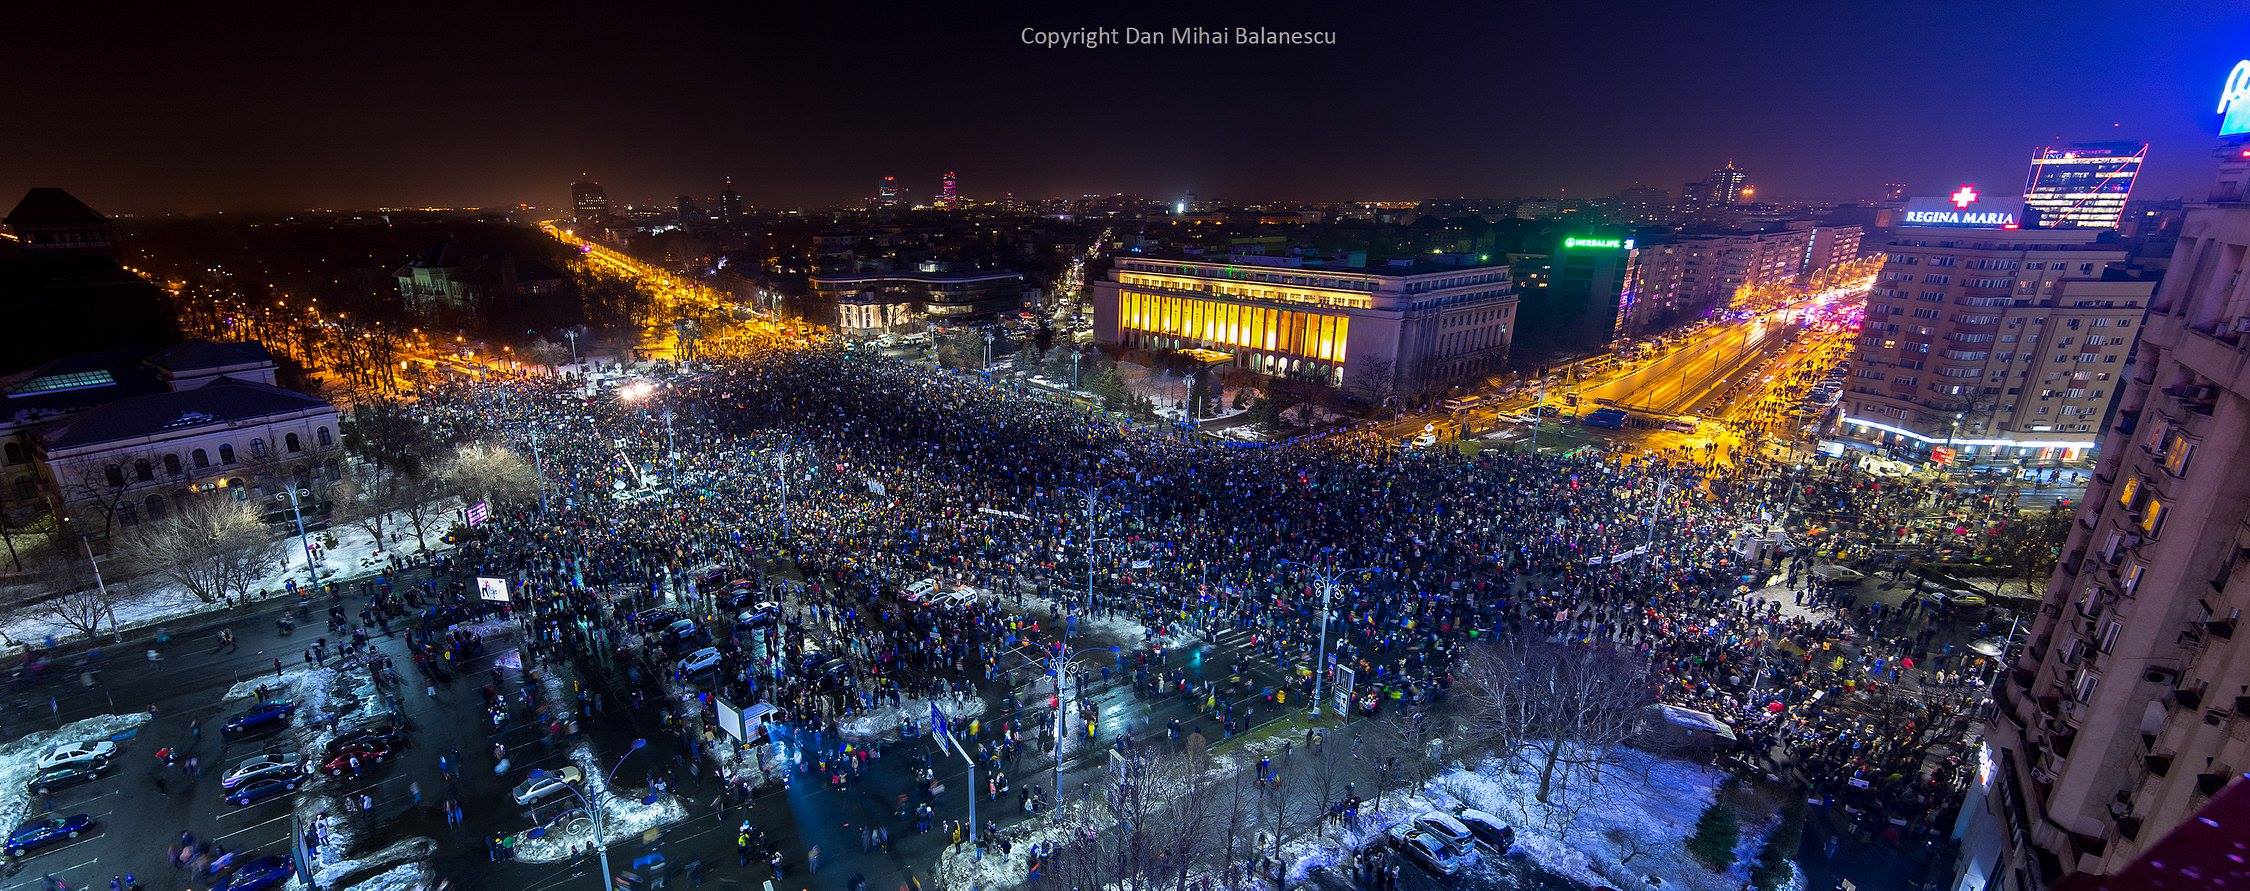 In 3 februarie, aproape 100.000 de romani au protestat in Piata Victoriei